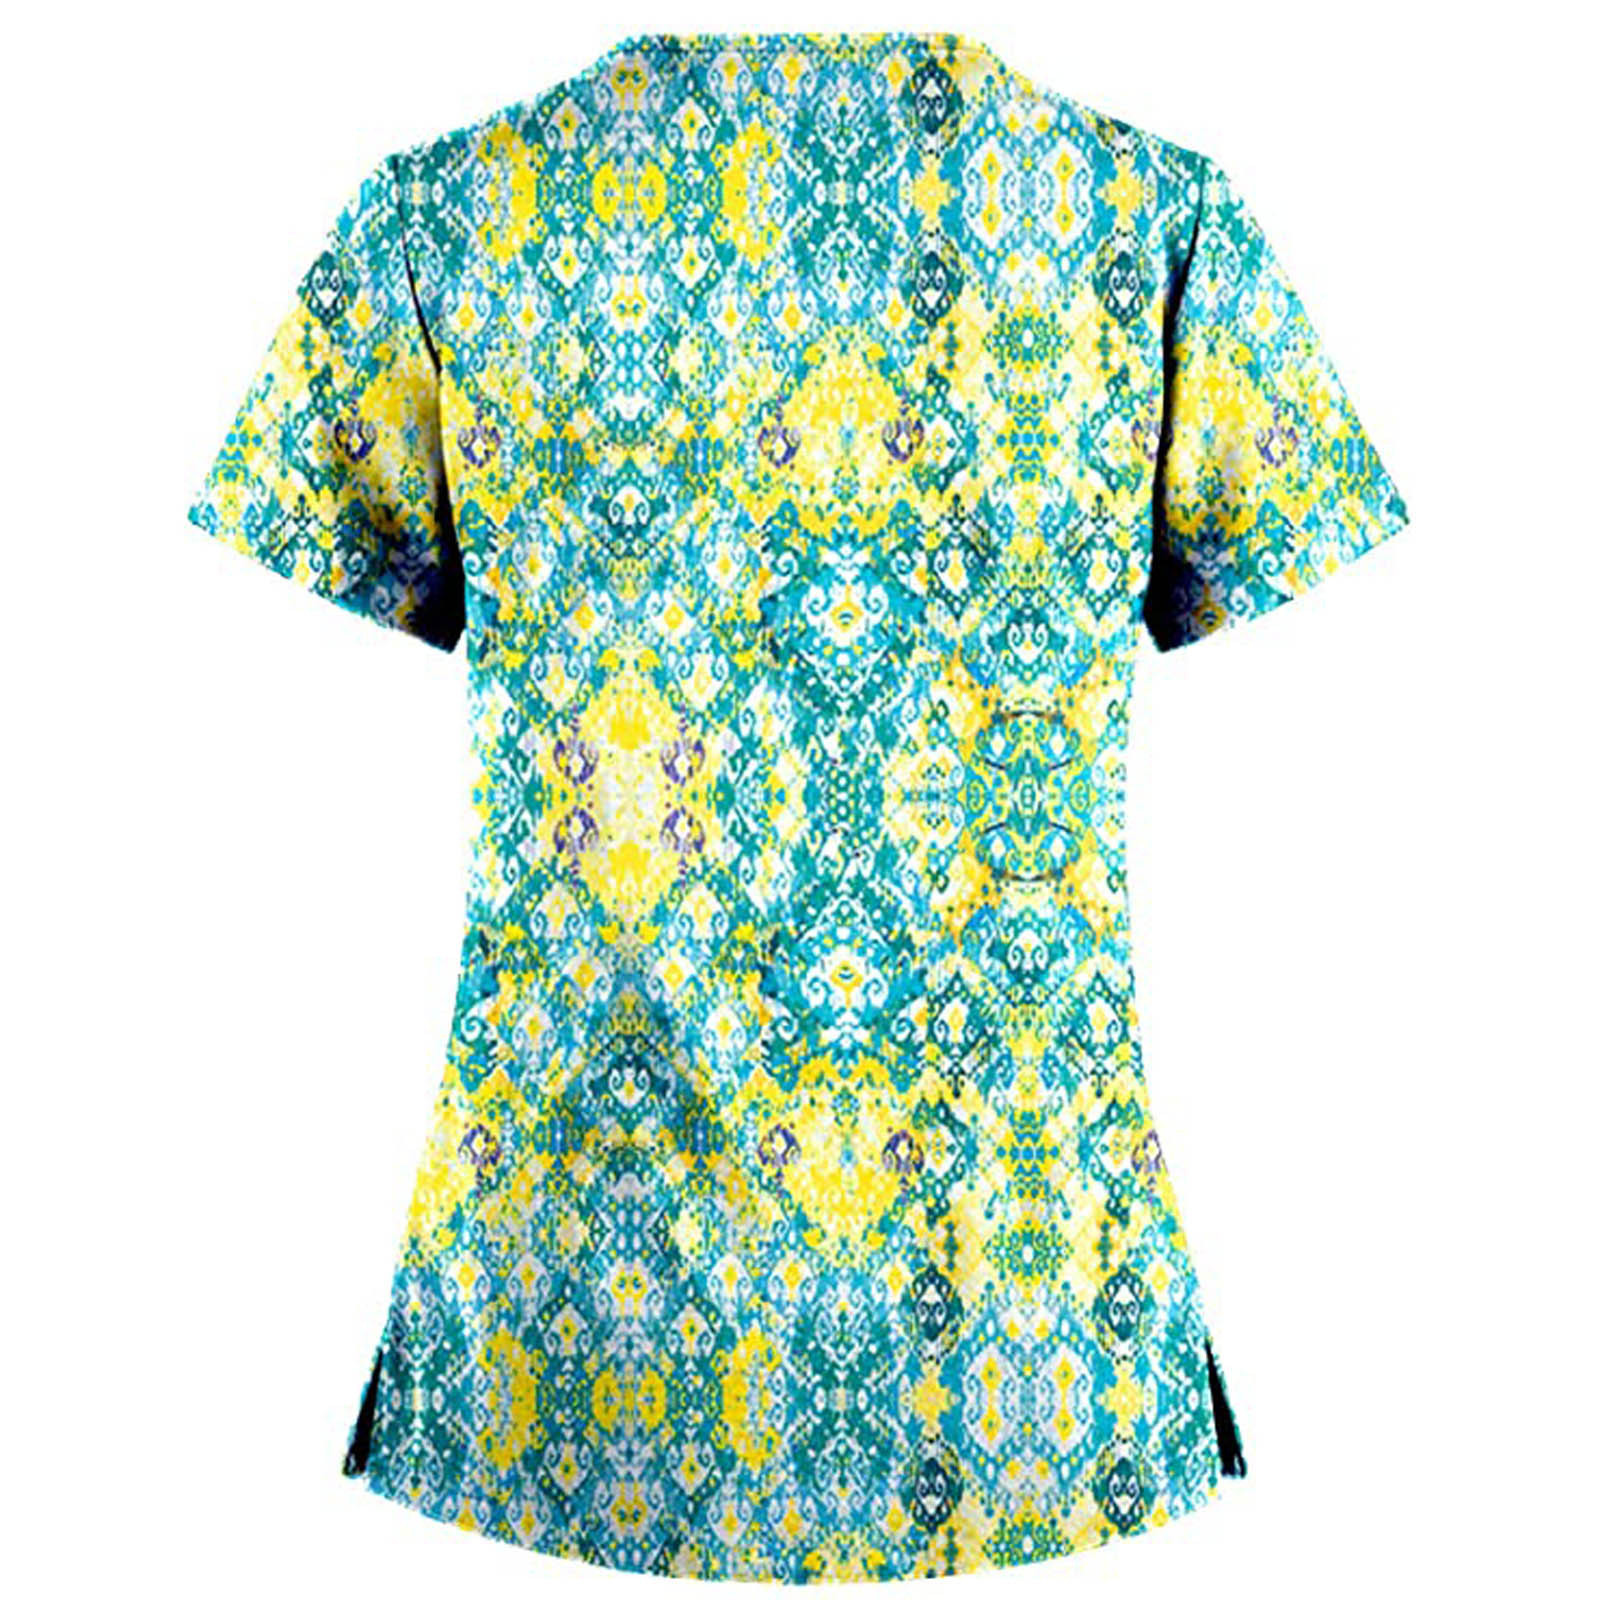 HAPIMO Women's Fashion Shirts Butterfly Print Tops V-Neck T-shirt Short ...